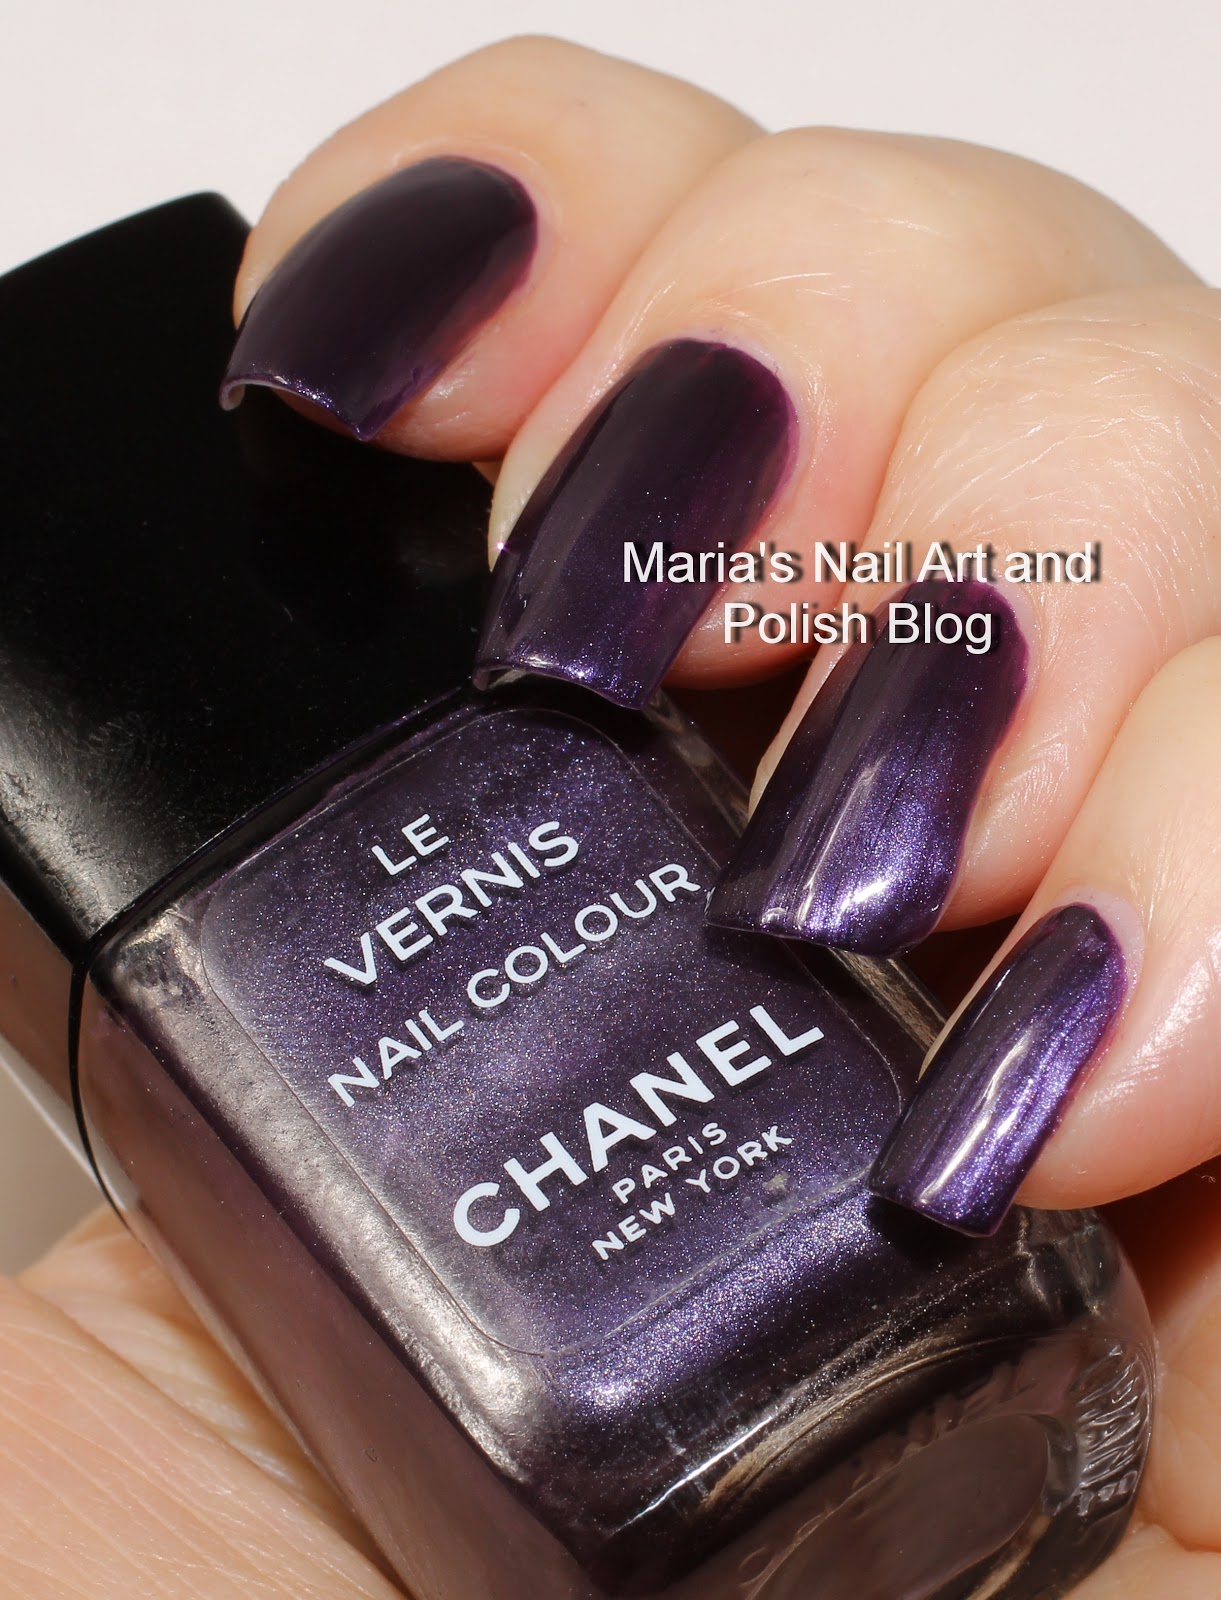 Marias Nail Art and Polish Blog: Chanel Rouge Argent/Metallic Vamp